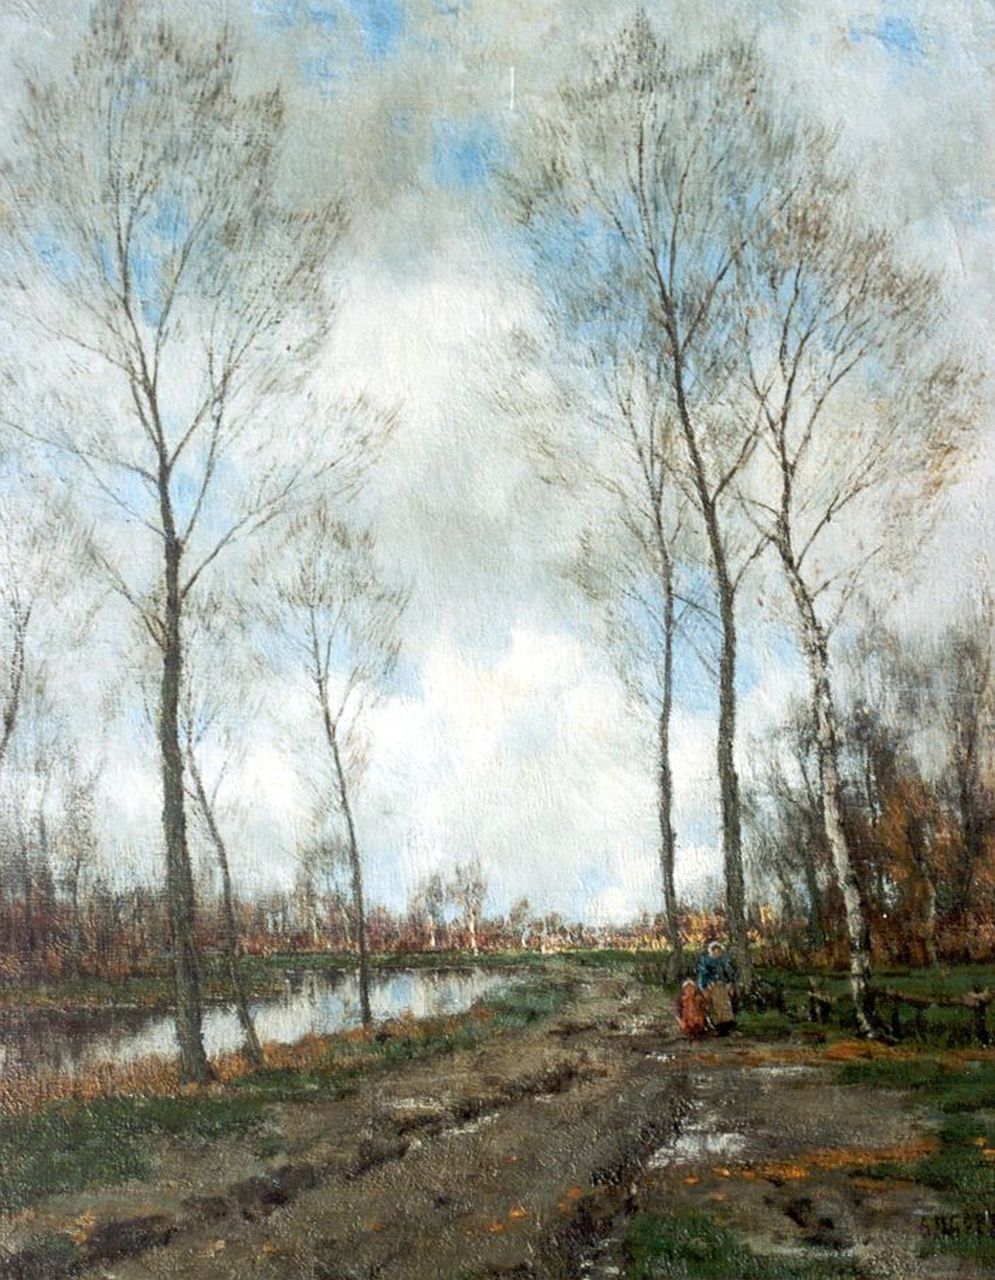 Gorter A.M.  | 'Arnold' Marc Gorter, Autumn landscape, Öl auf Leinwand 56,3 x 46,3 cm, signed l.r.